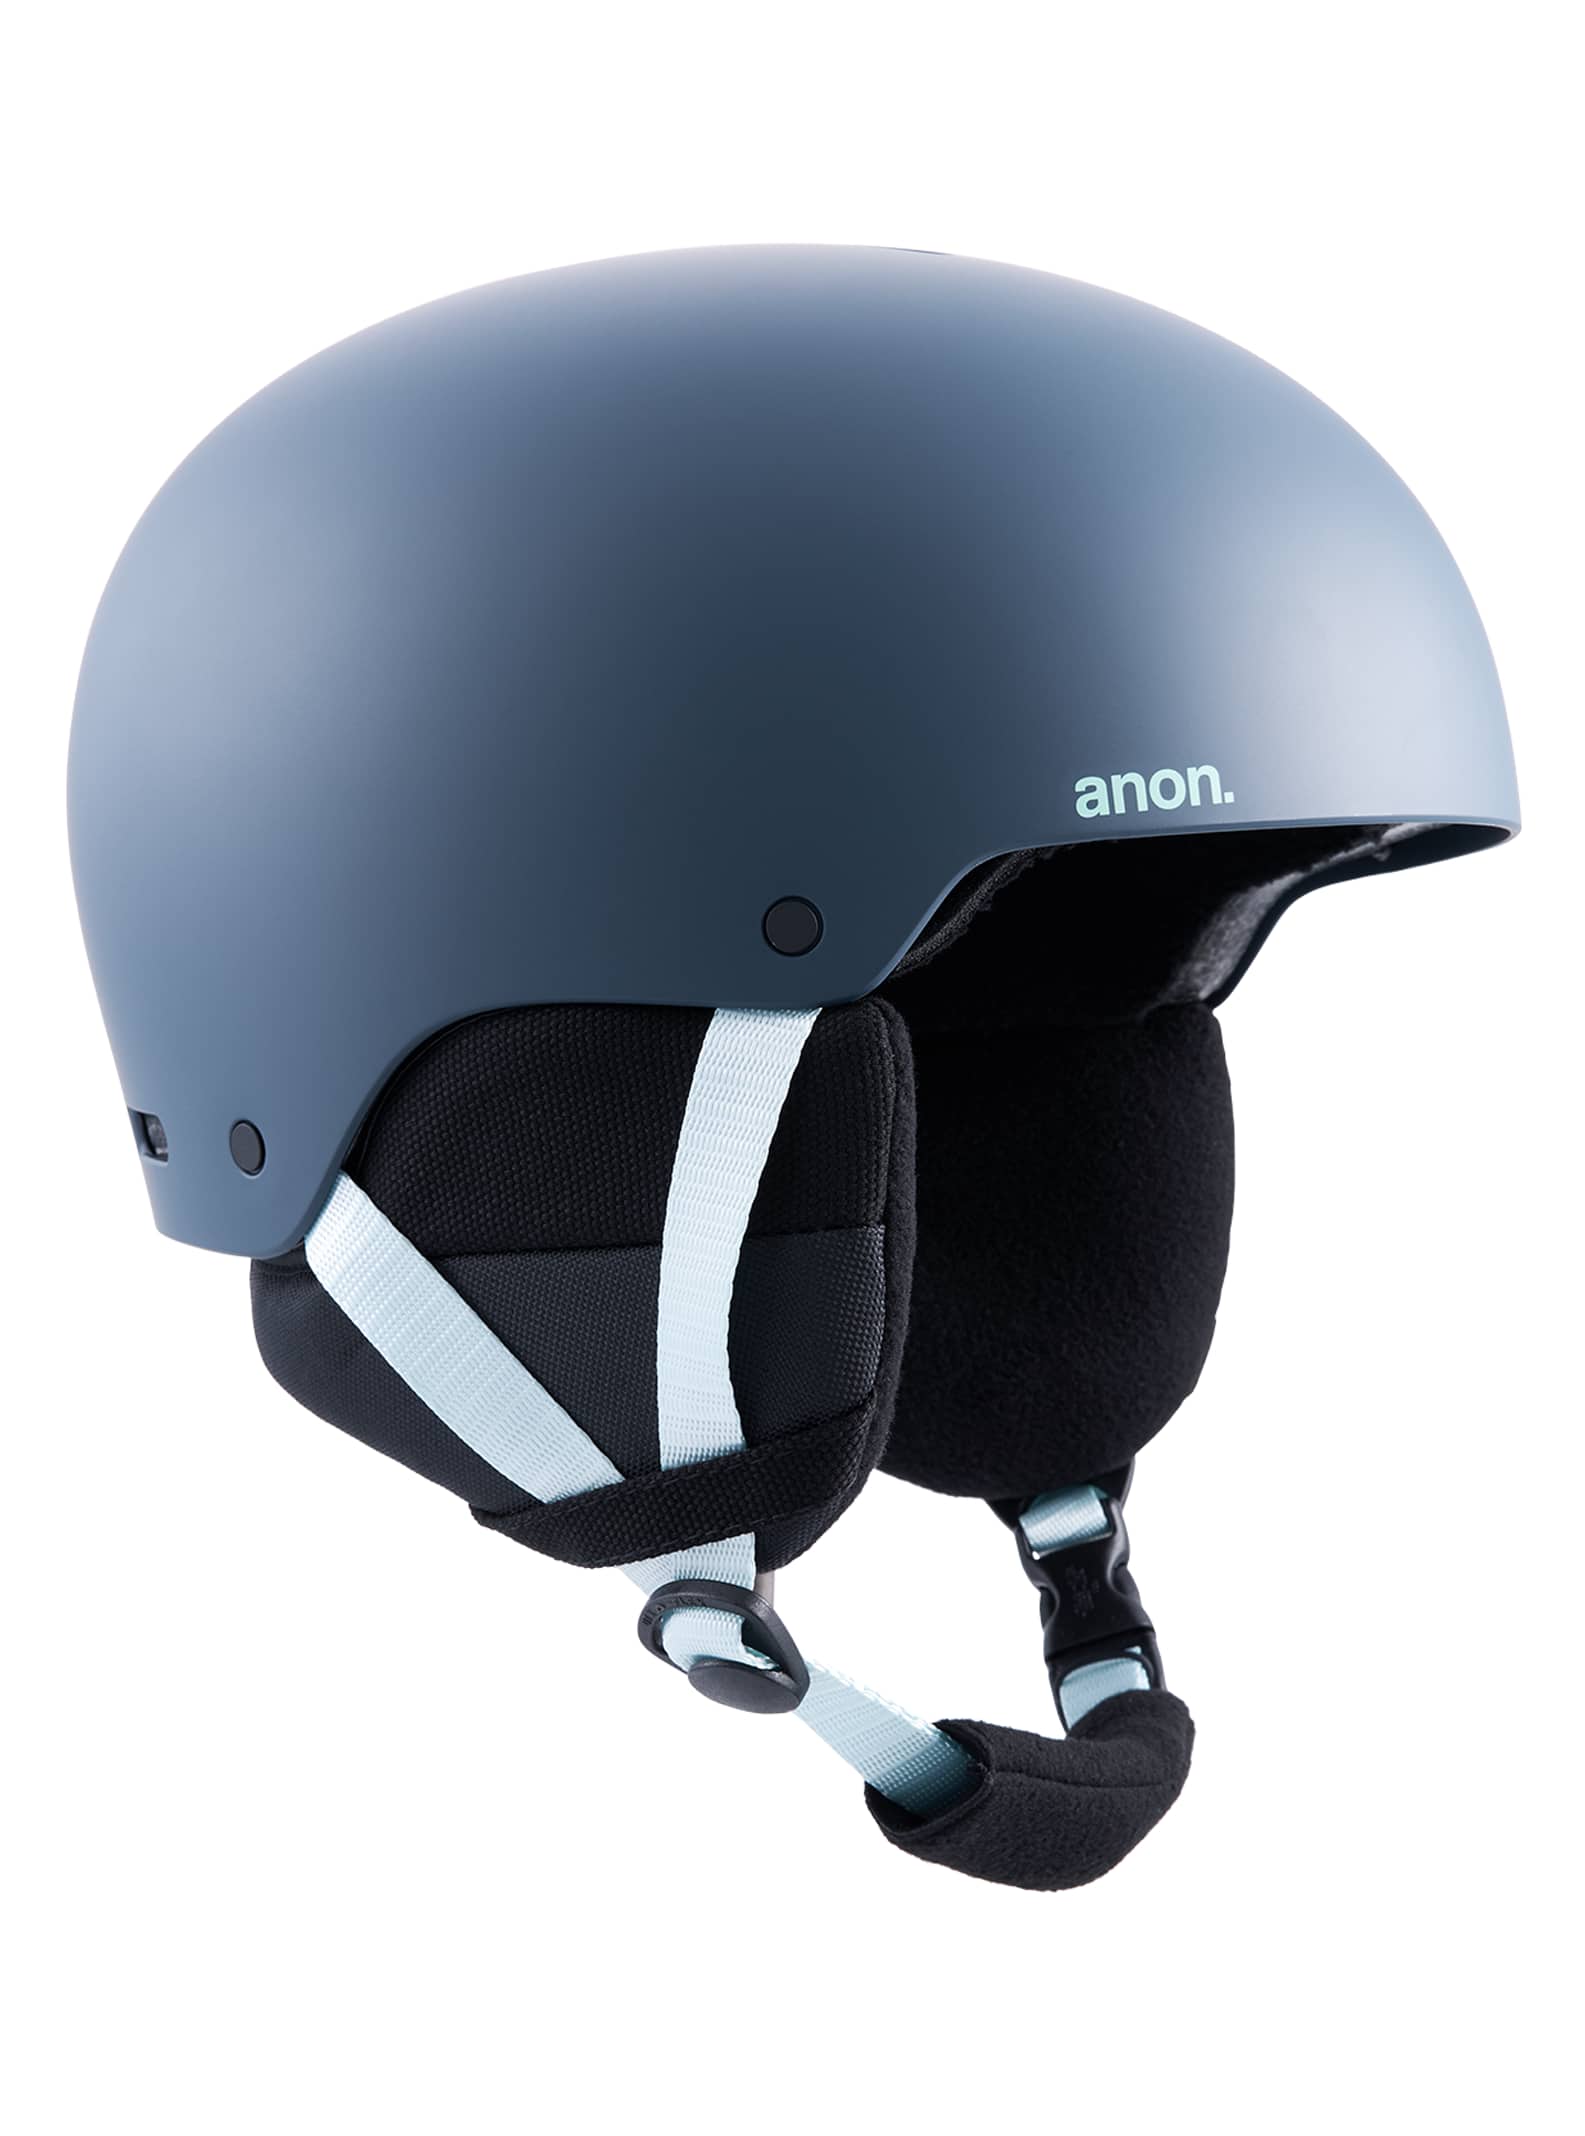 Anon Raider 3 Helmet | Burton.com Winter 2022 US